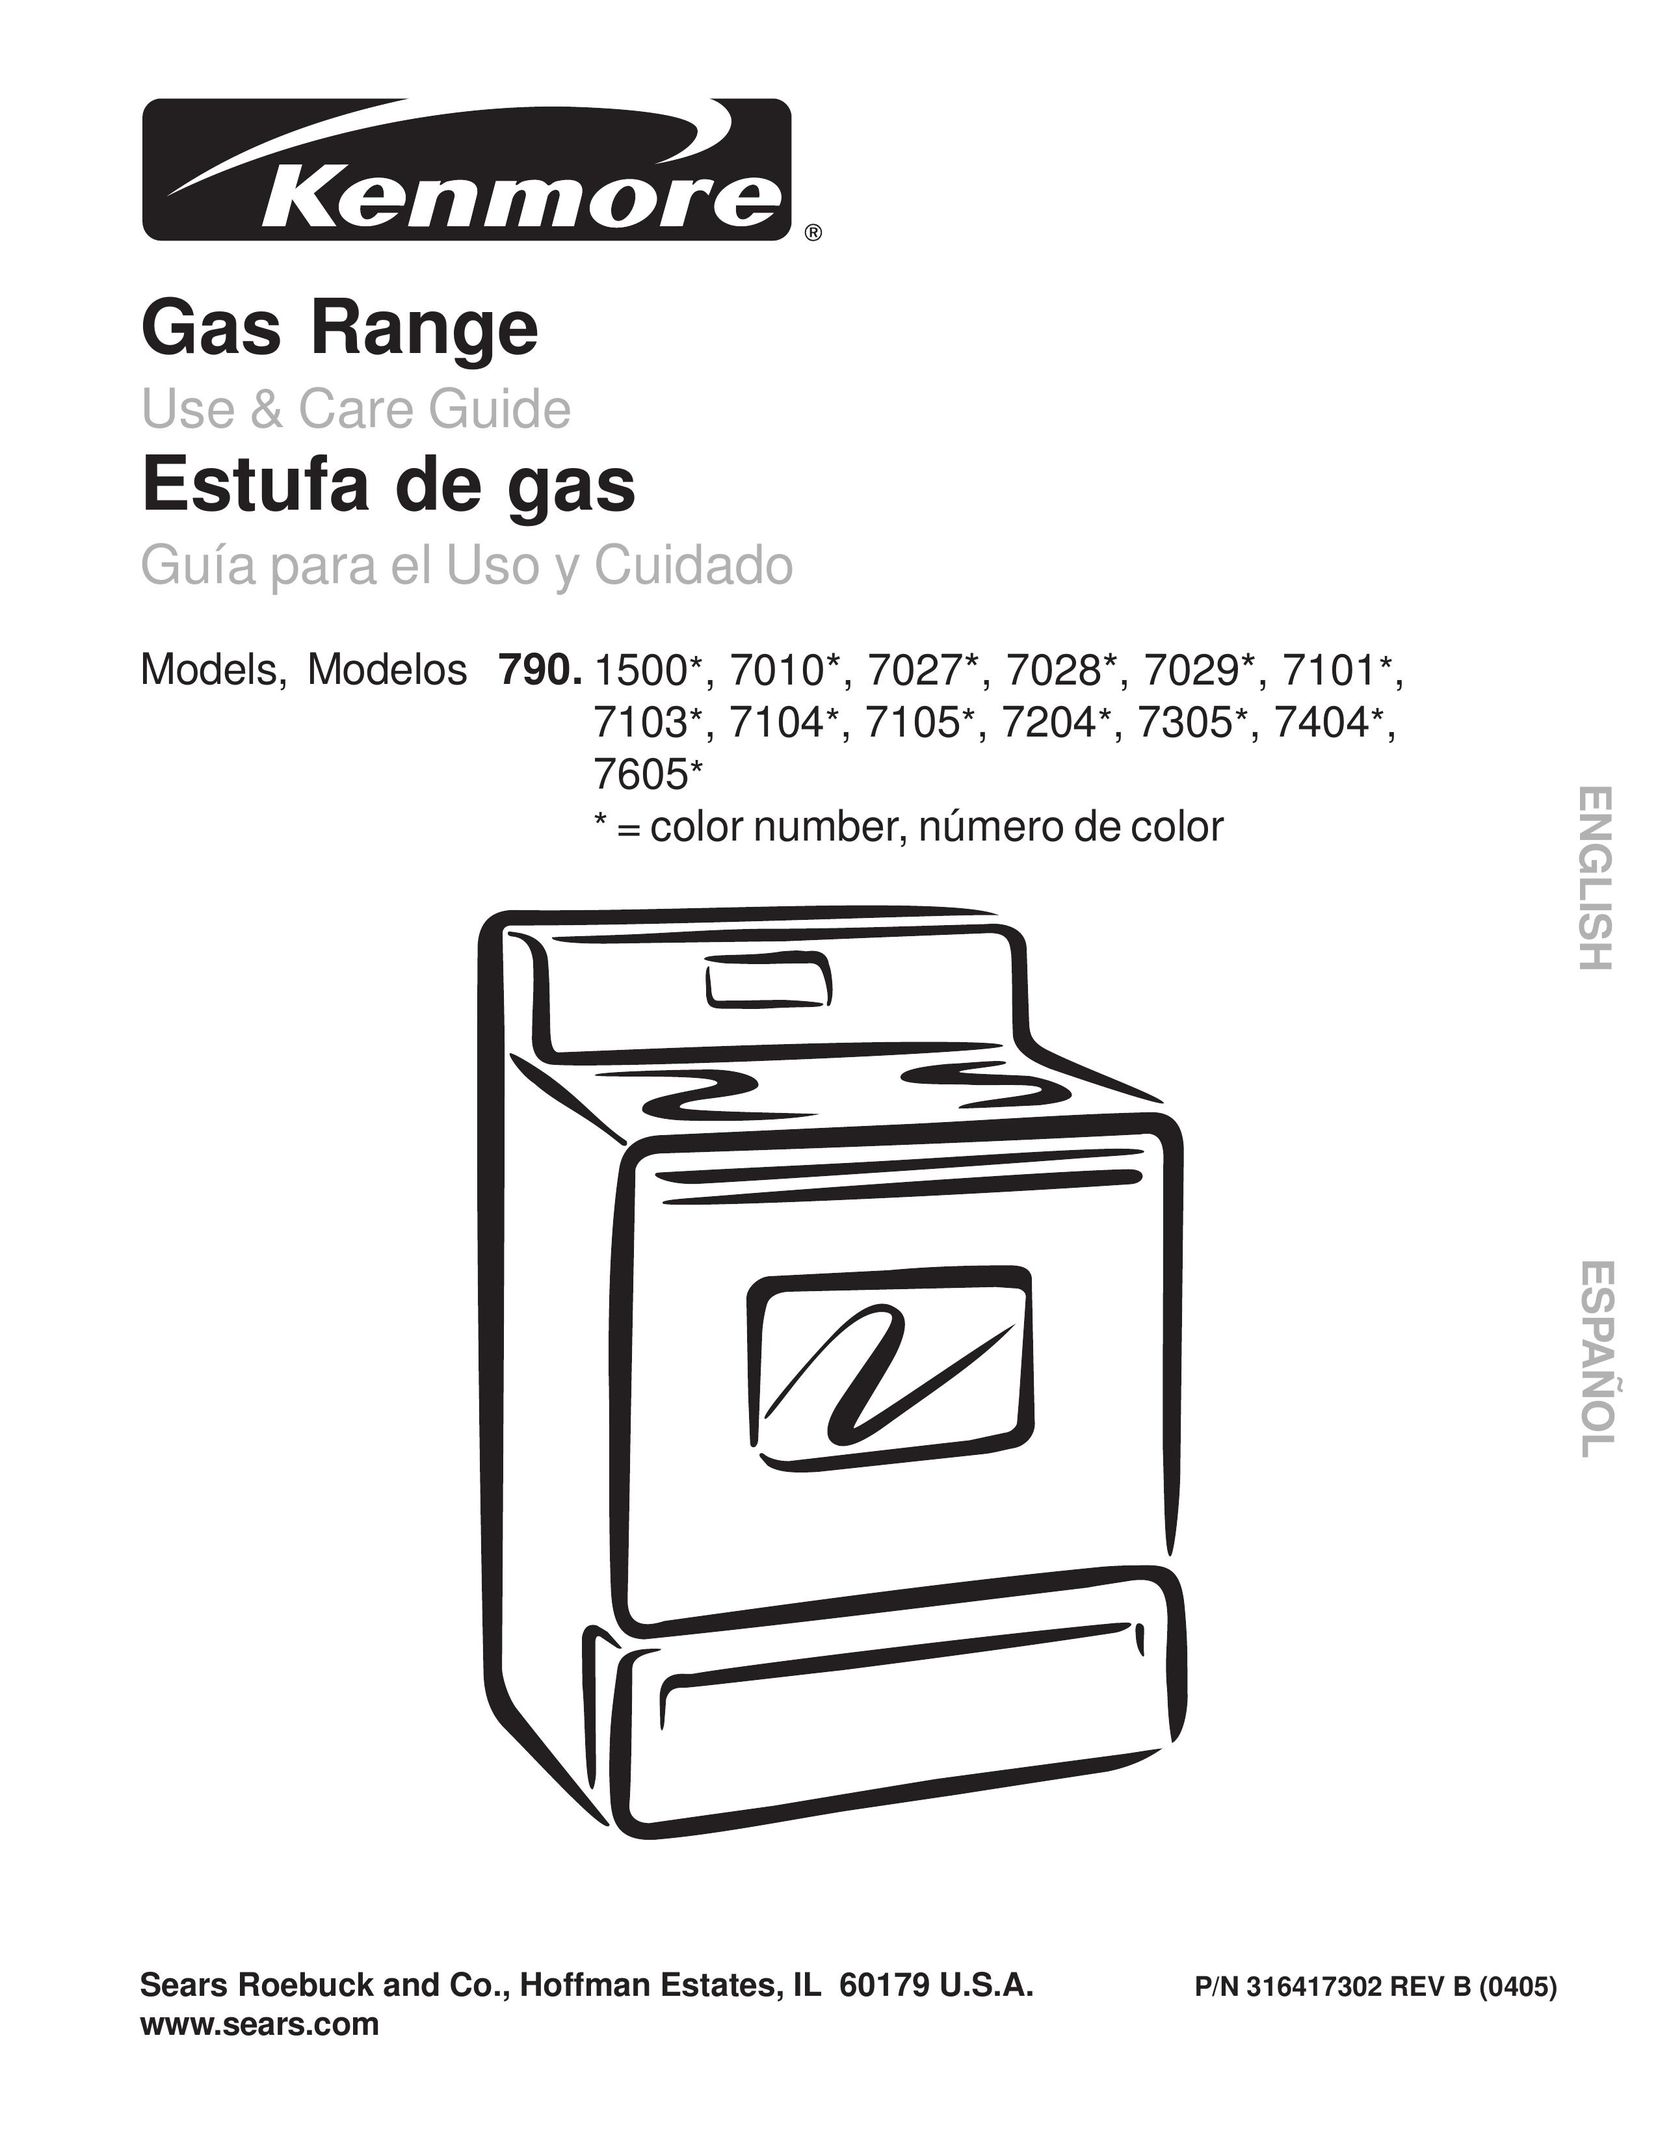 Sears 7204* Range User Manual